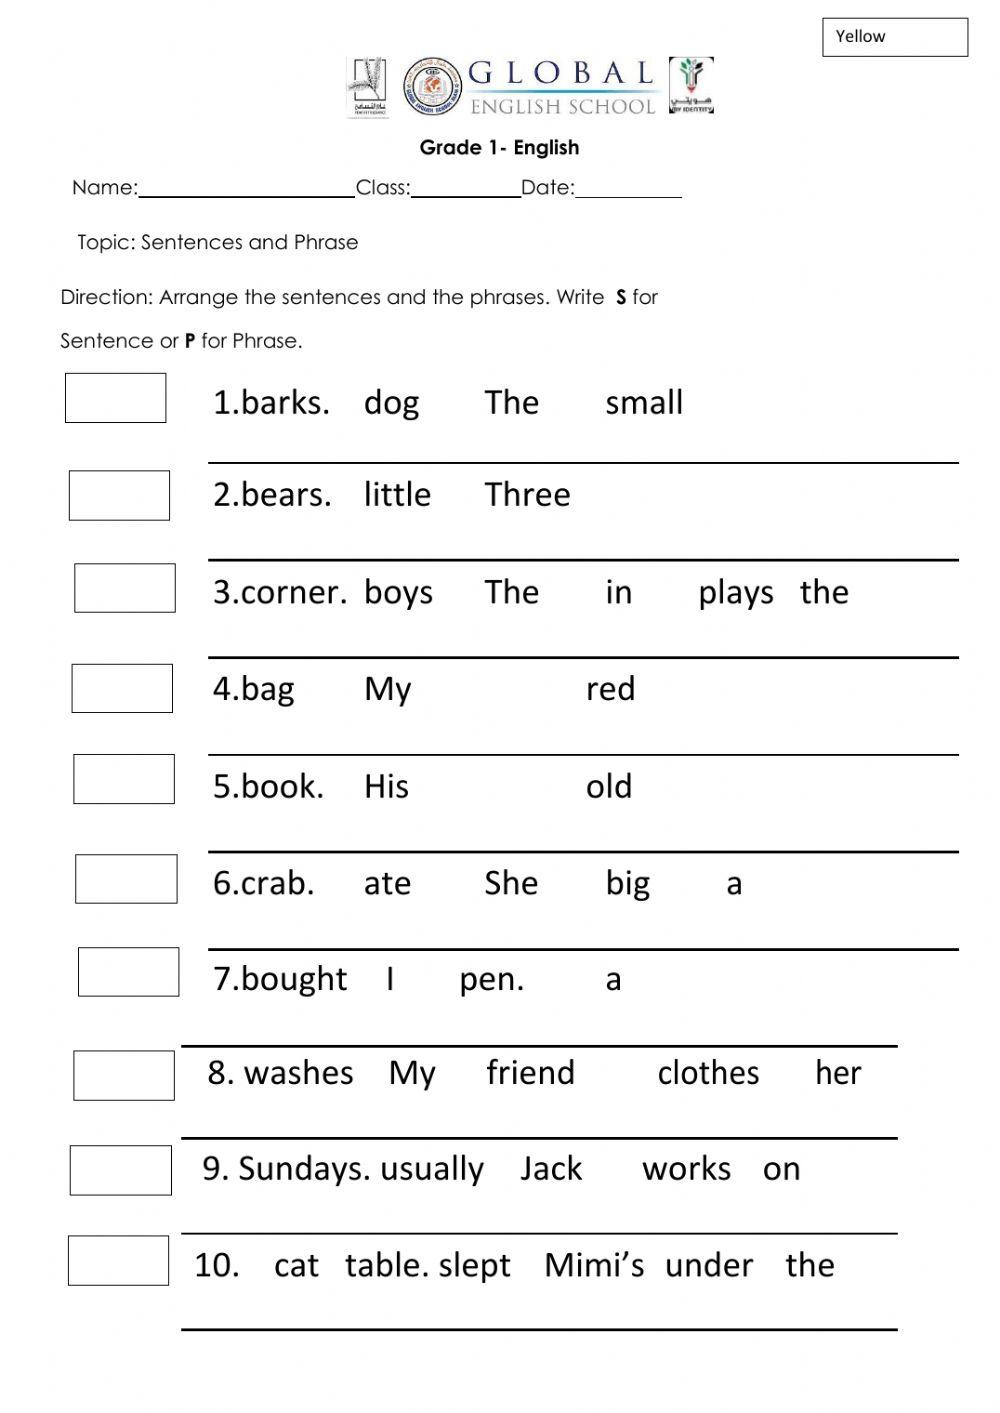 Worksheet On Sentences And Phrases For Grade 4